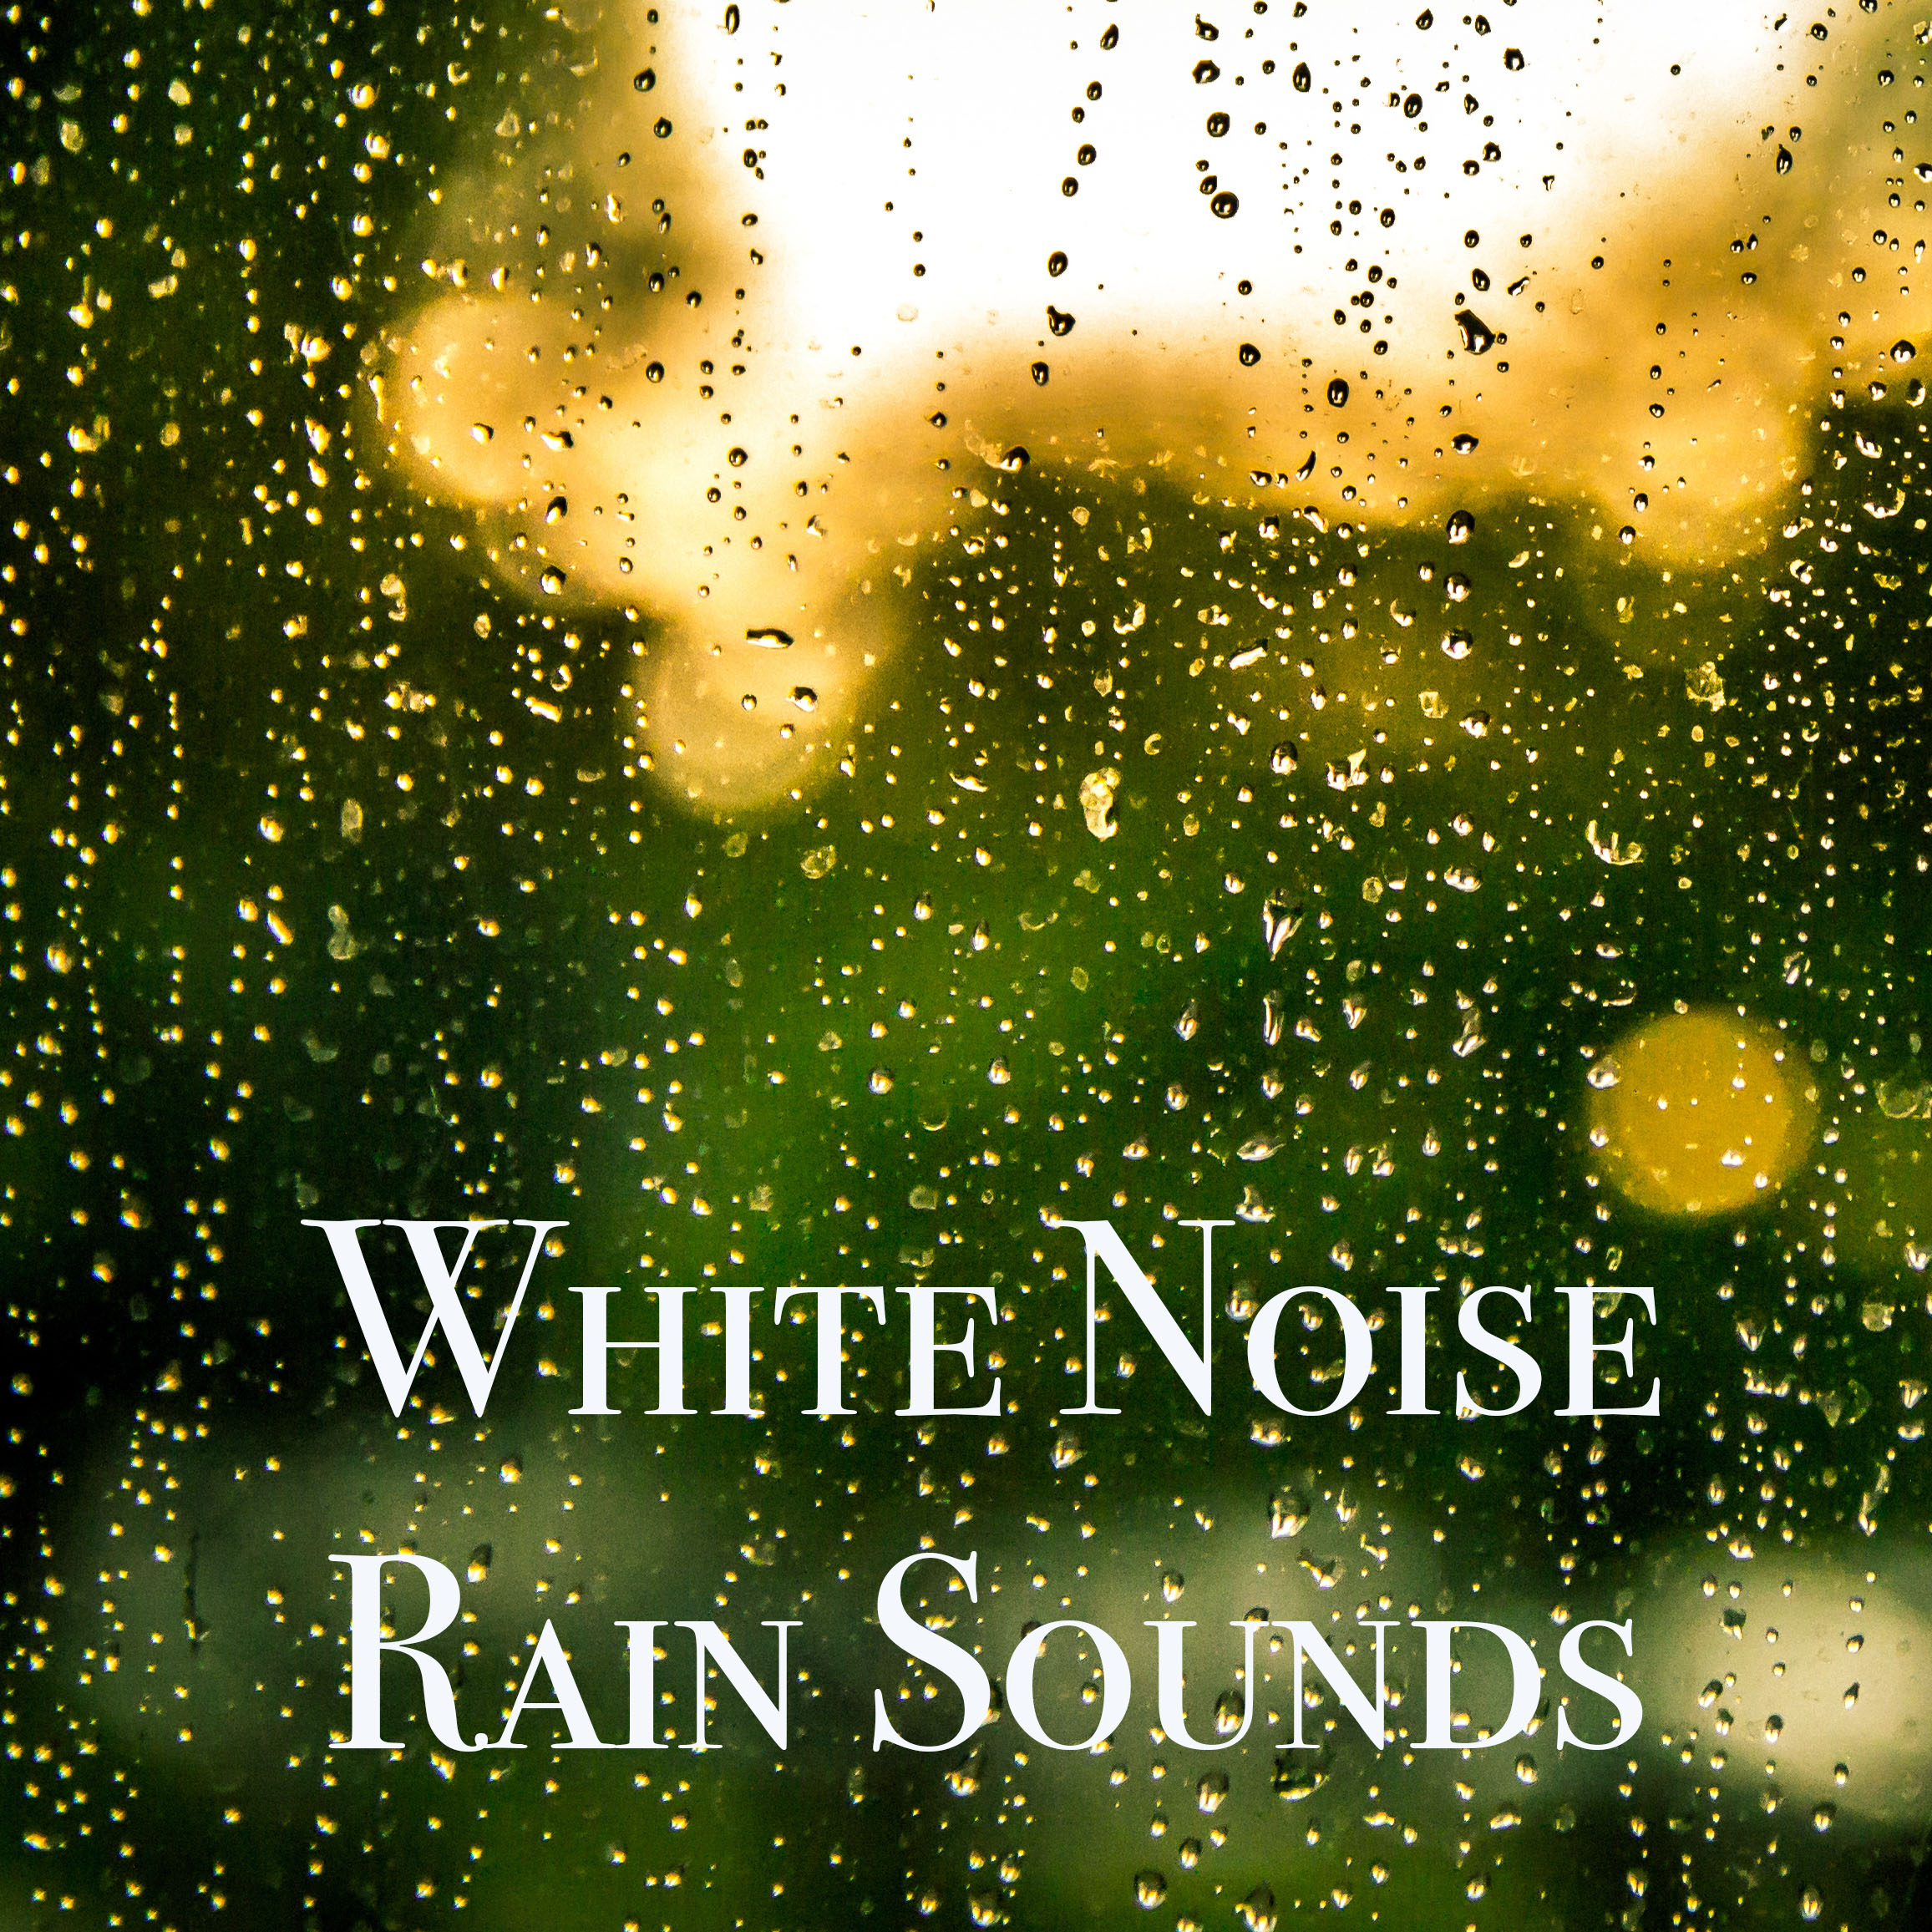 17 White Noise, Spa & Meditation Rain Sounds